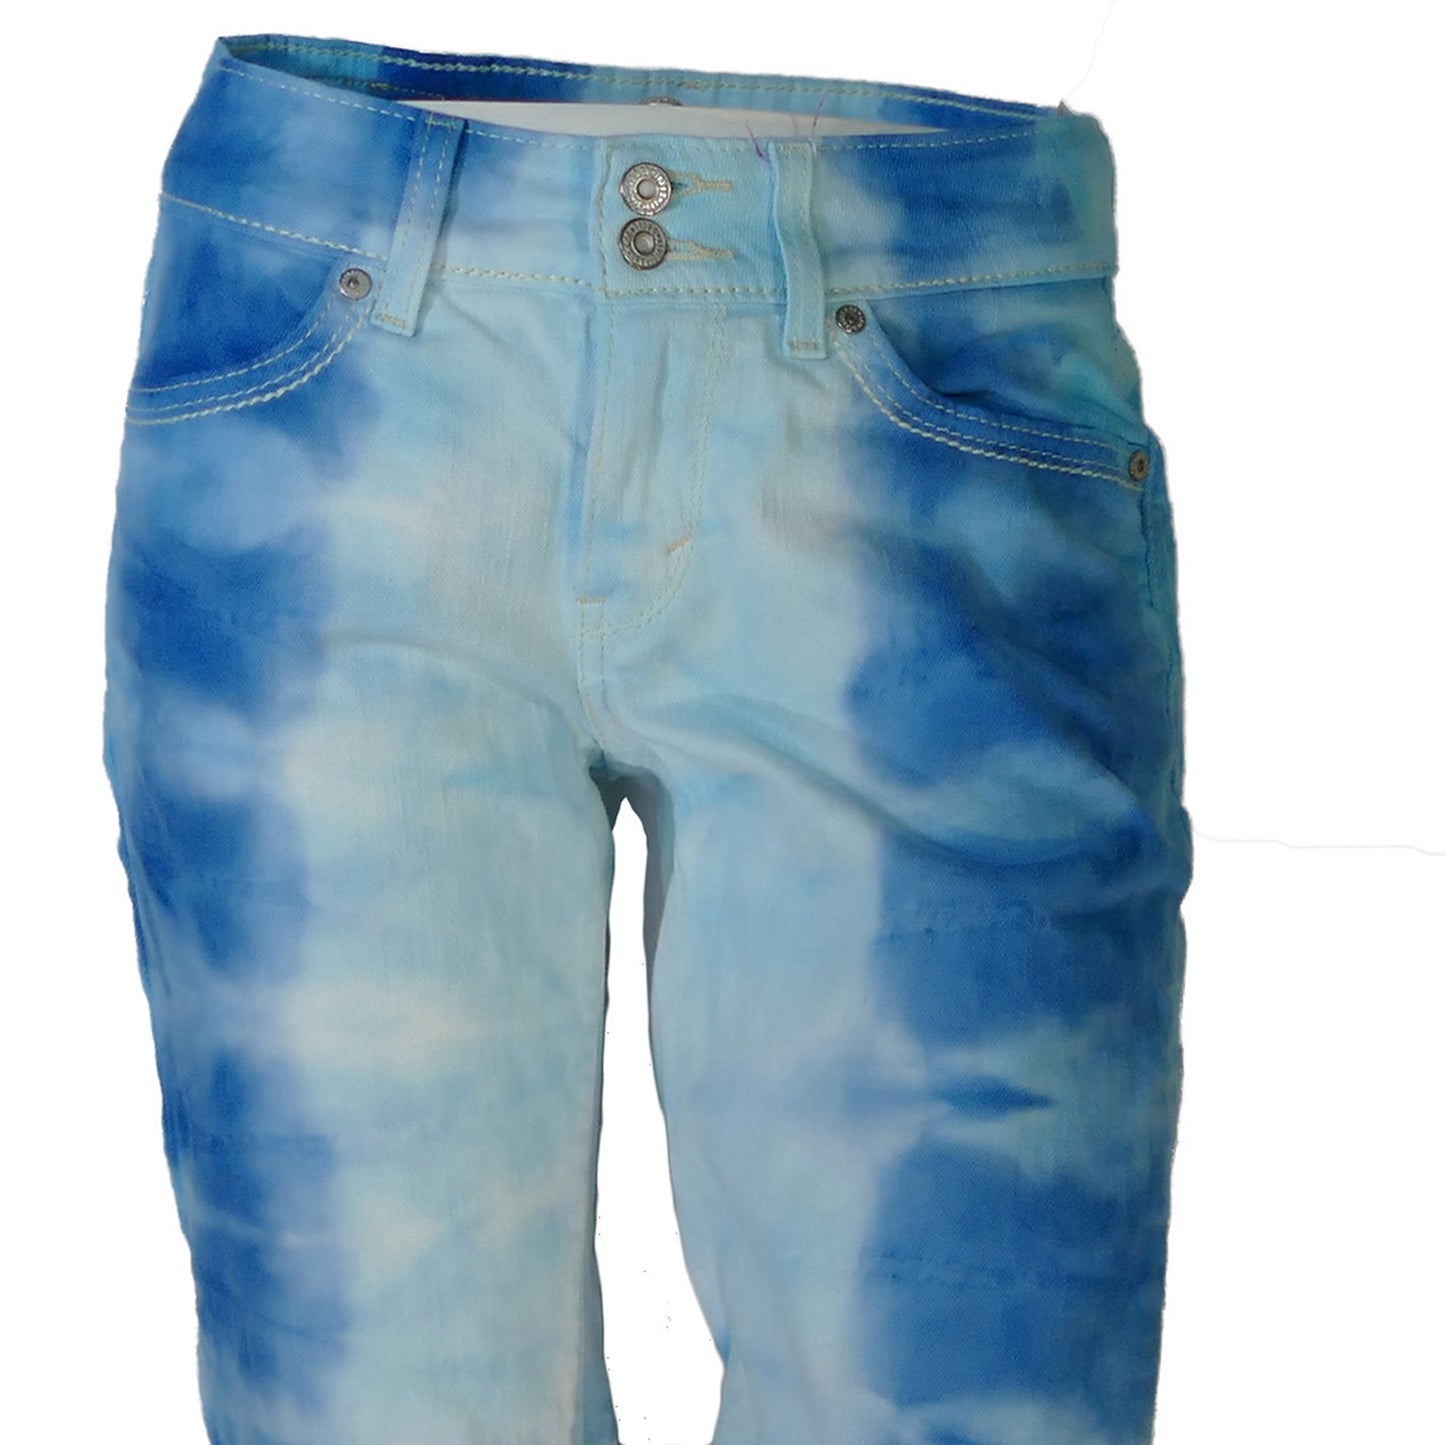 Tie Dye Jeans Size 6M Curvy Straight Levis 539 Blue Sides